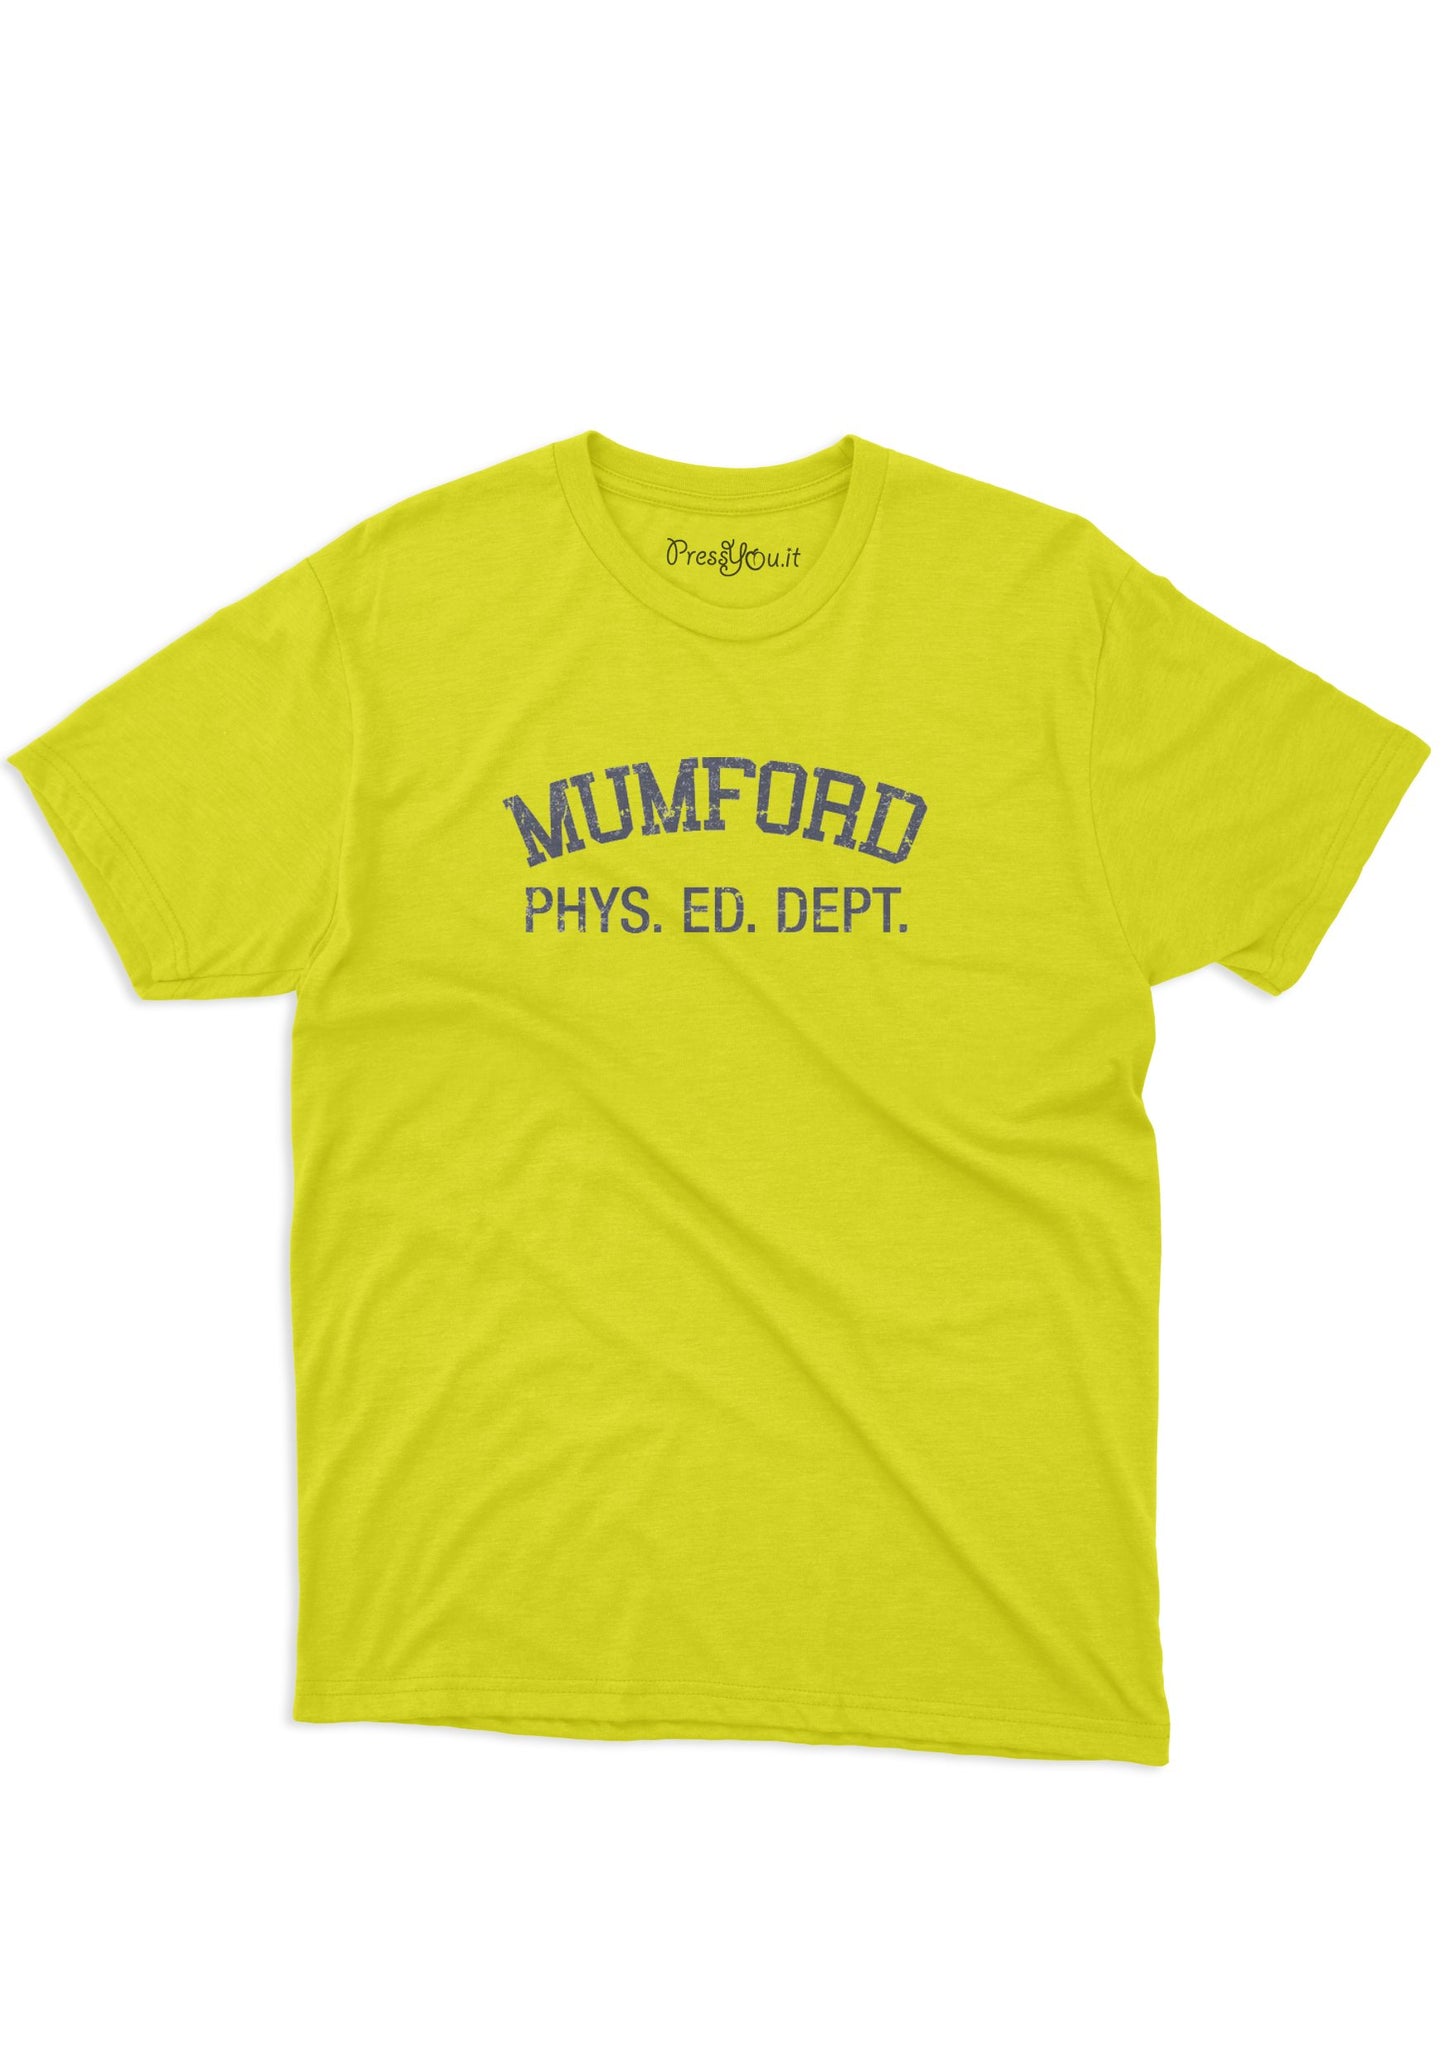 T-Shirt - Mumford Phys Ed Dept